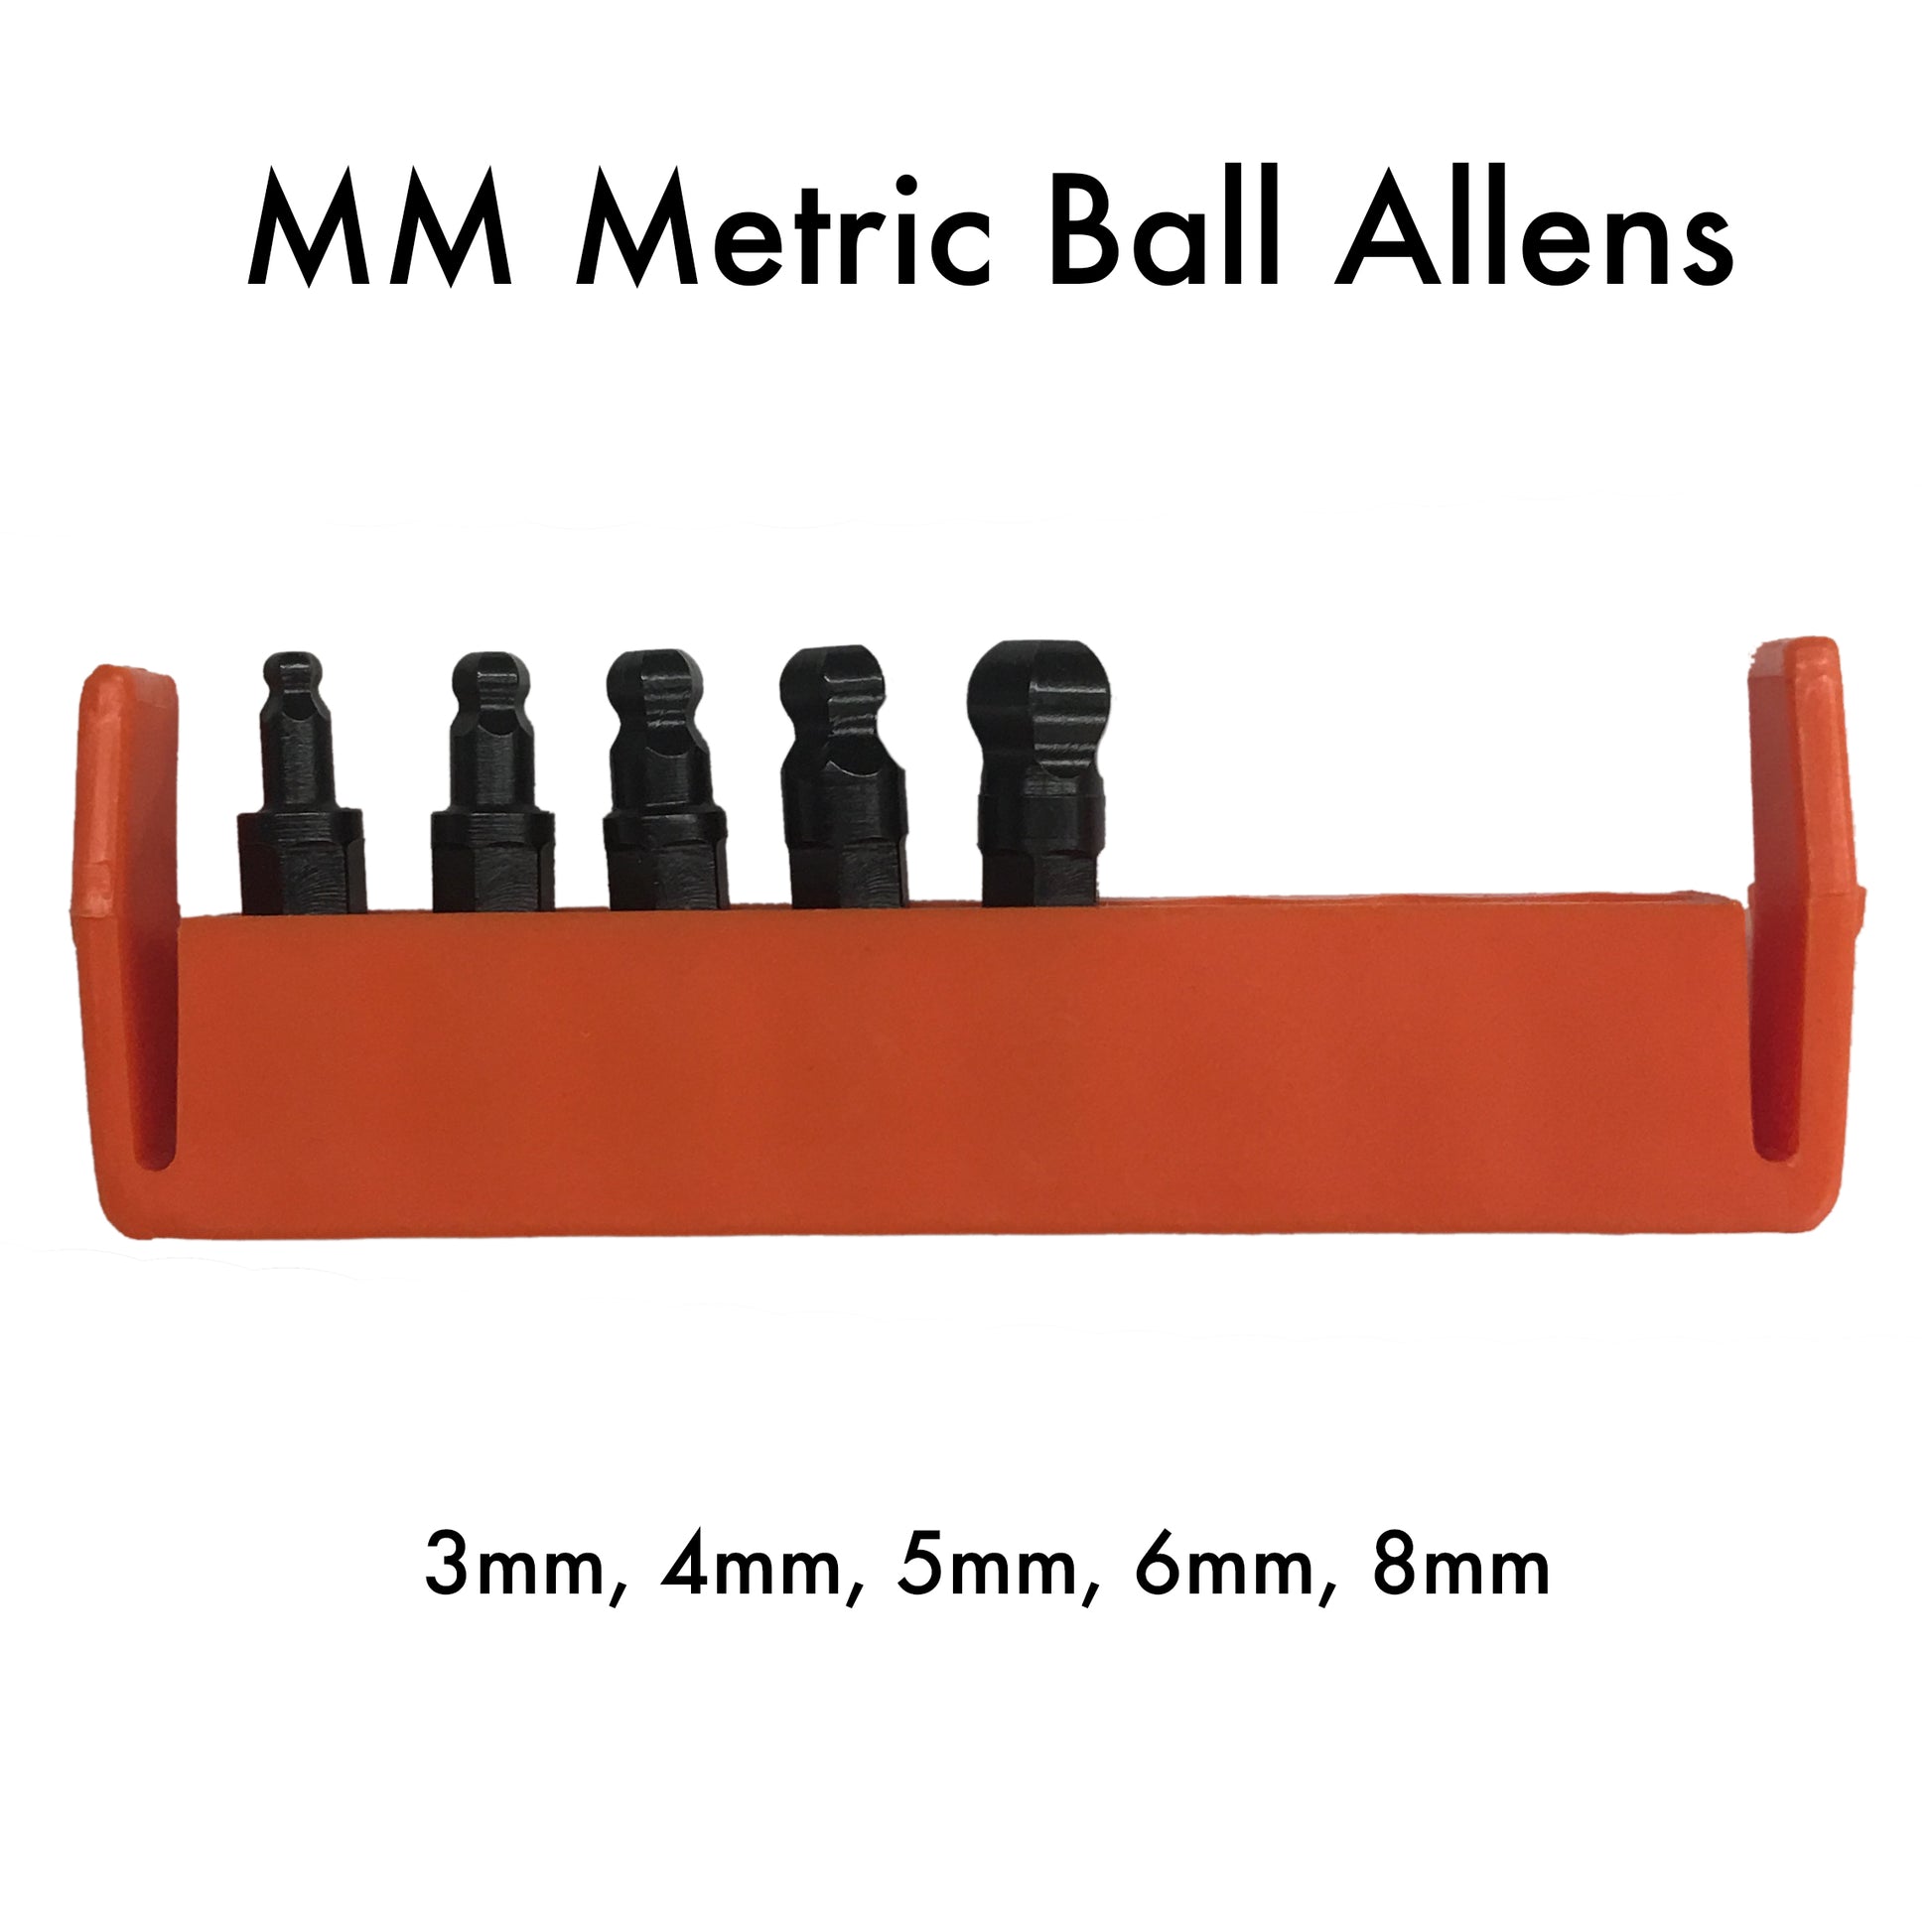 MM Metric Ball Allen Screwdriver Bits - 3mm, 4mm, 5mm, 8mm  | Chapman MFG